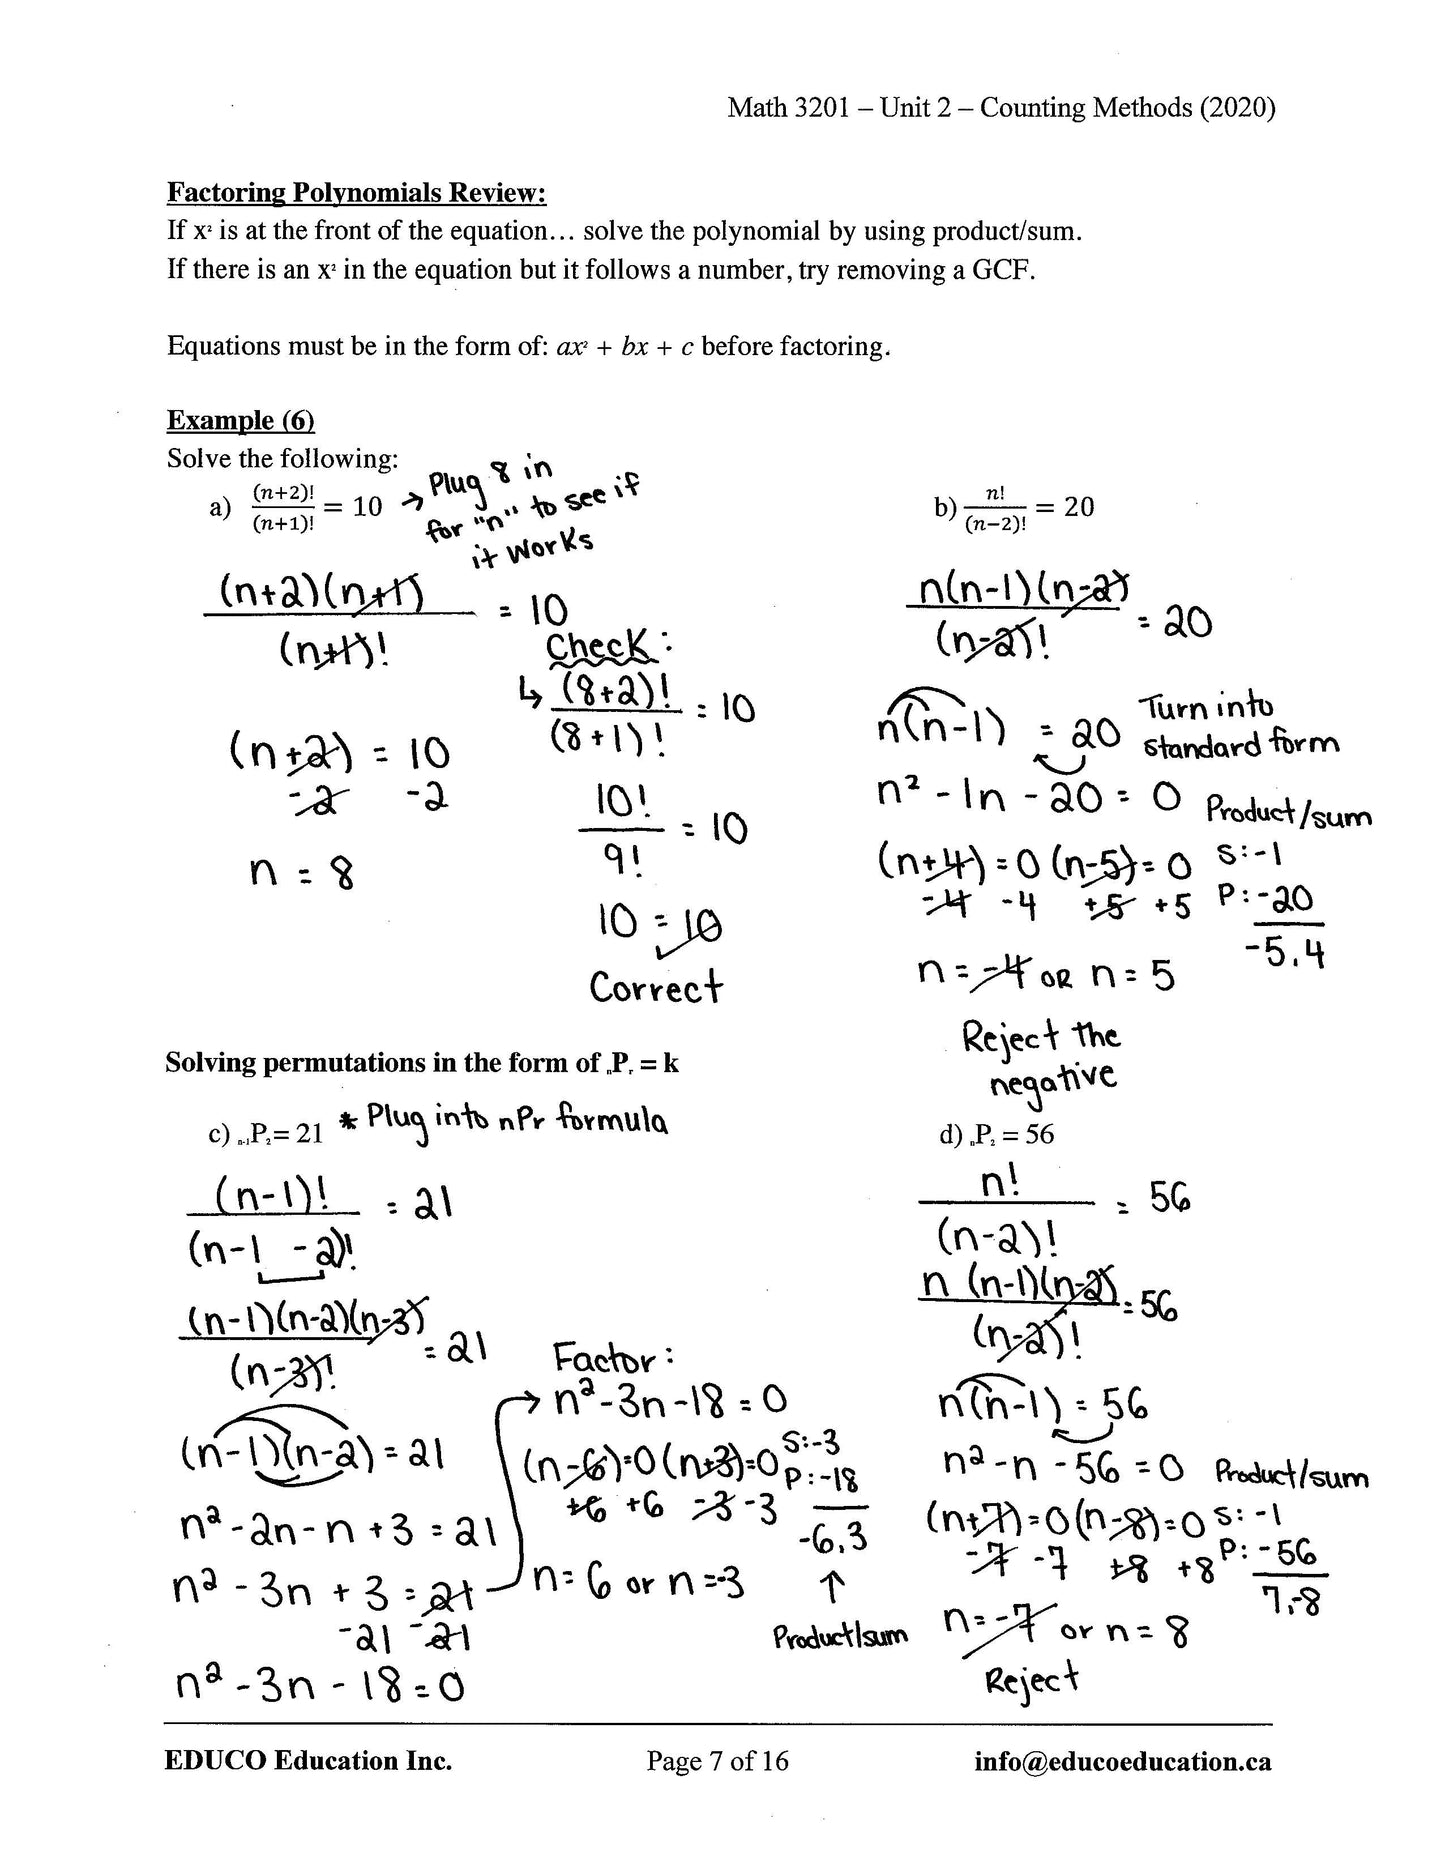 Math 3201 (Physical Workbook)